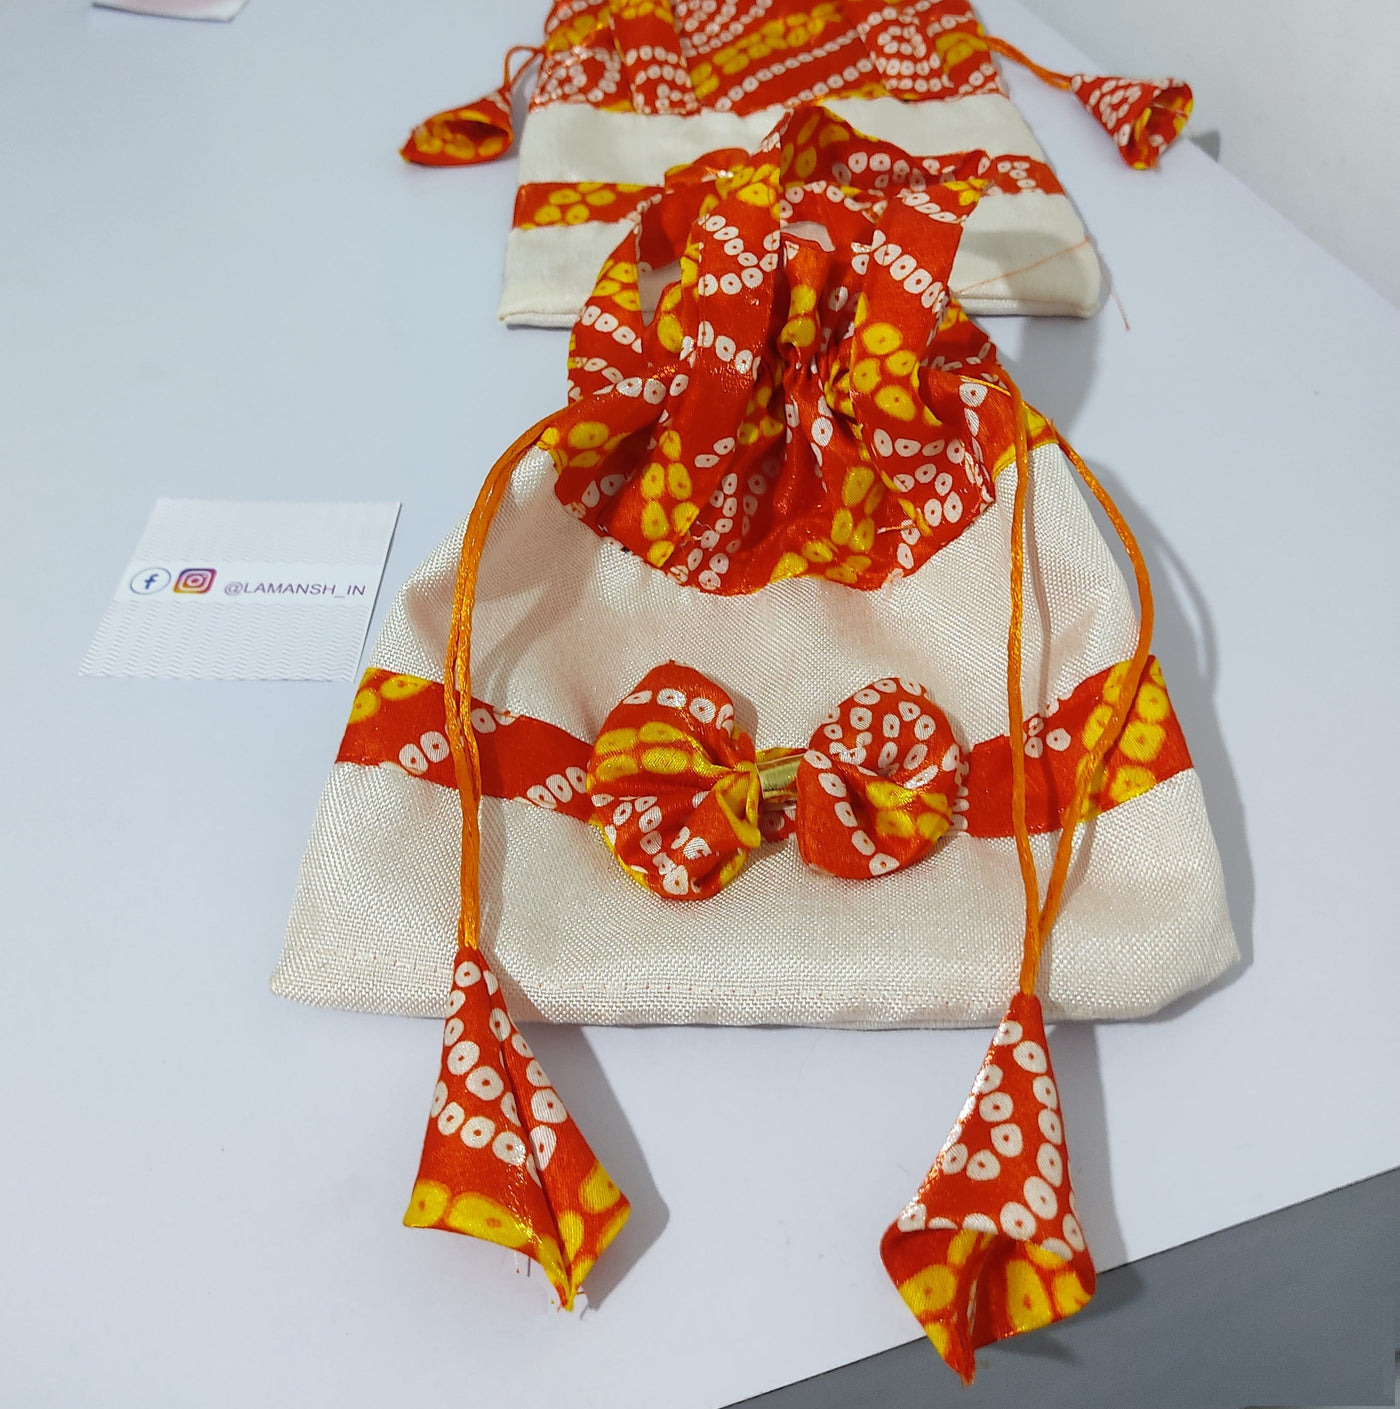 55 Rs ON BUYING 🏷100 PCS bulk potli LAMANSH® (9*11 inch) Designer Bandhej Fabric Potli Bags for Return Gifts 🎁 & Giveaways in Wedding & Pooja Ceremony's